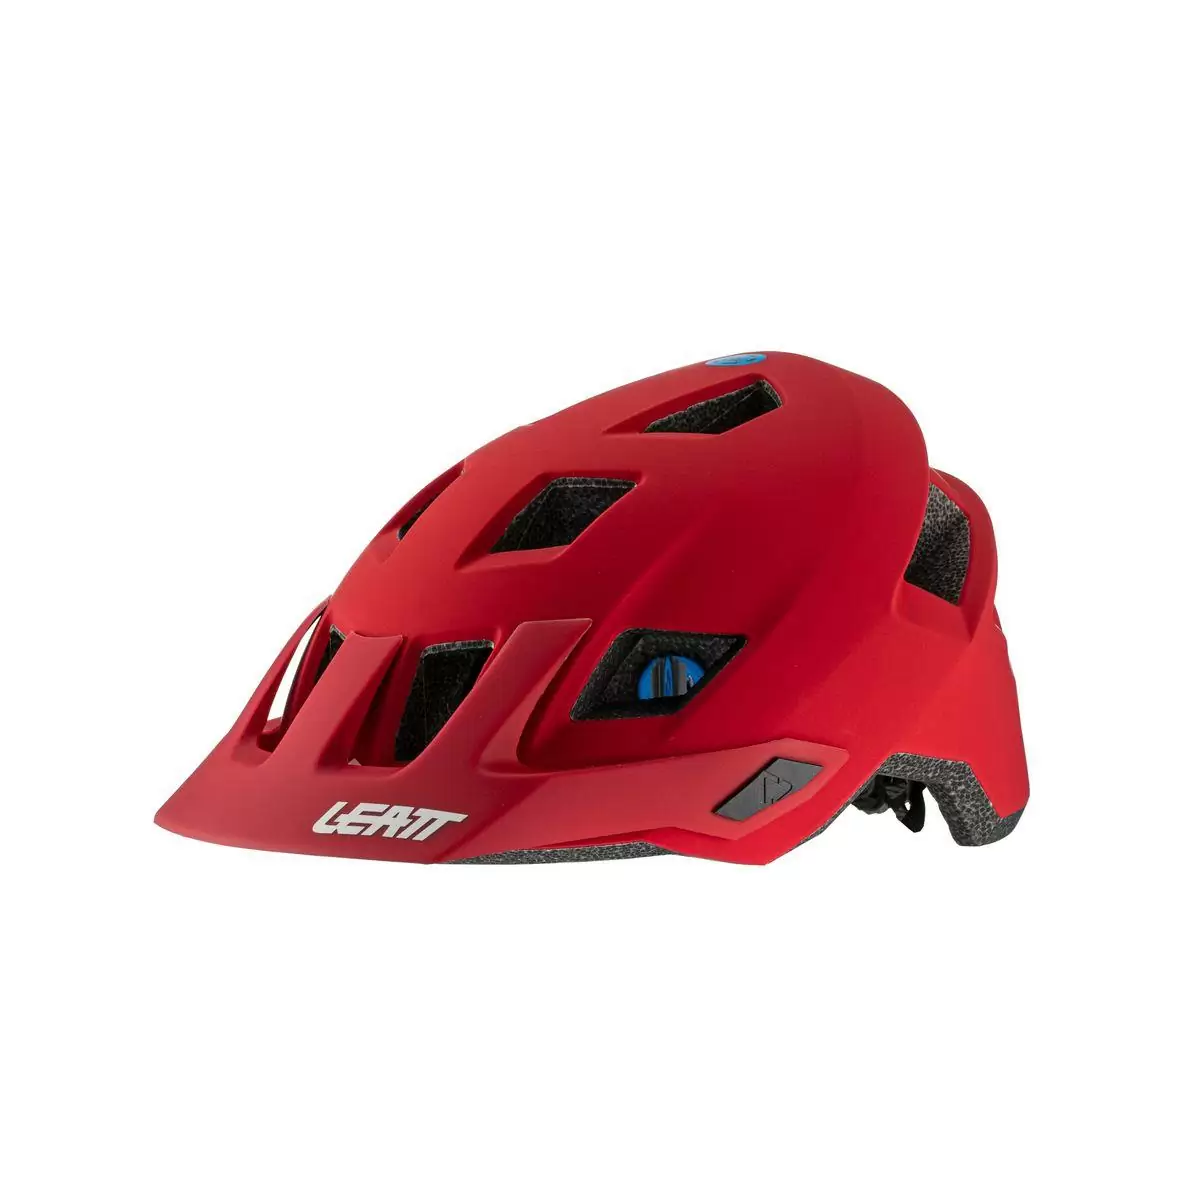 Helmet MTB 1.0 Turbine Technology Red Size M (55-59cm) - image